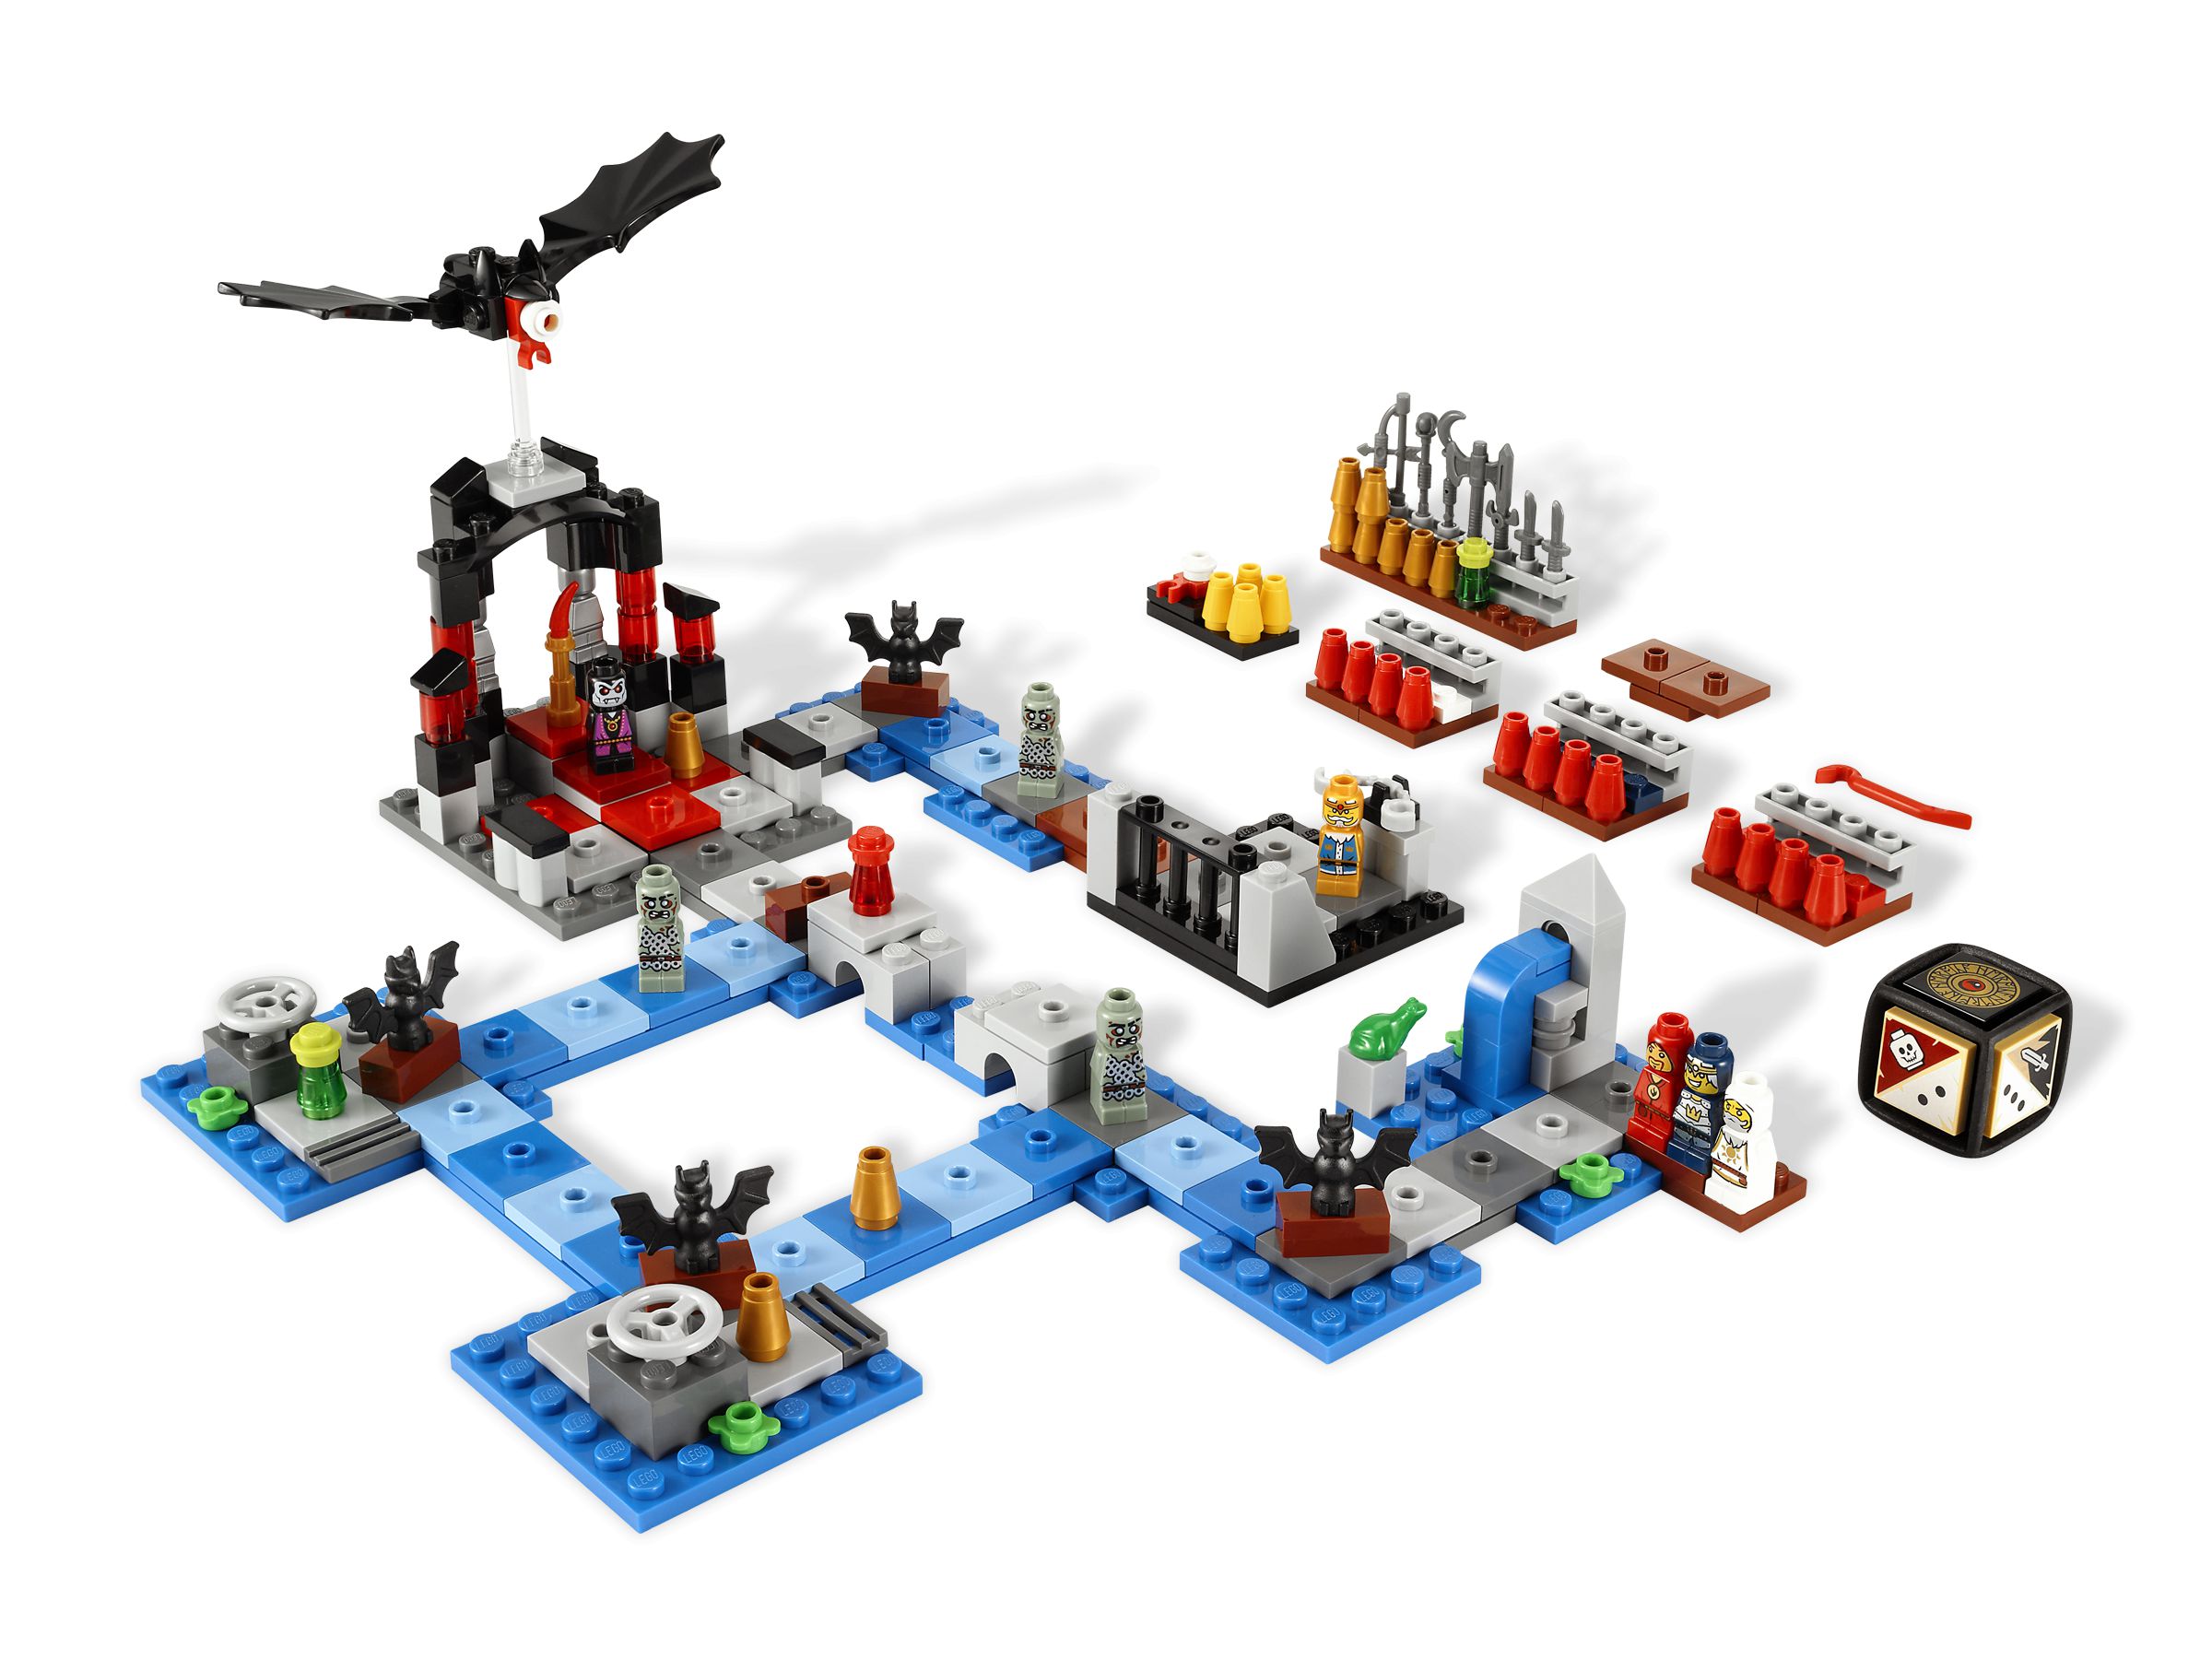 LEGO Games 3874 HEROICA Ilrion LEGO_3874_alt1.jpg